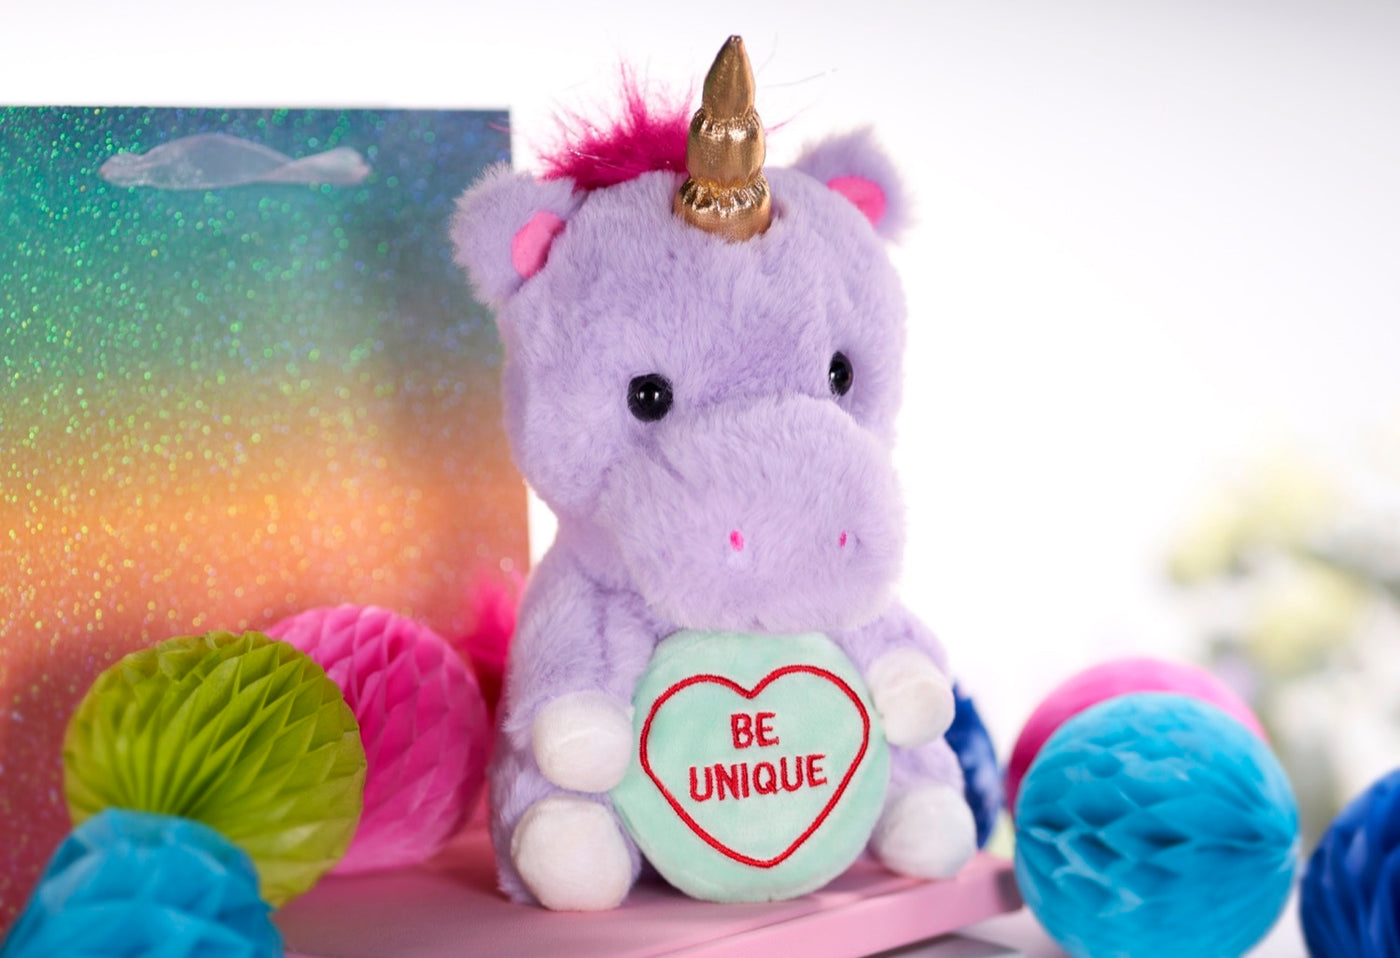 Swizzles Love Hearts - Unicorn (Be Unique) Plush Toy